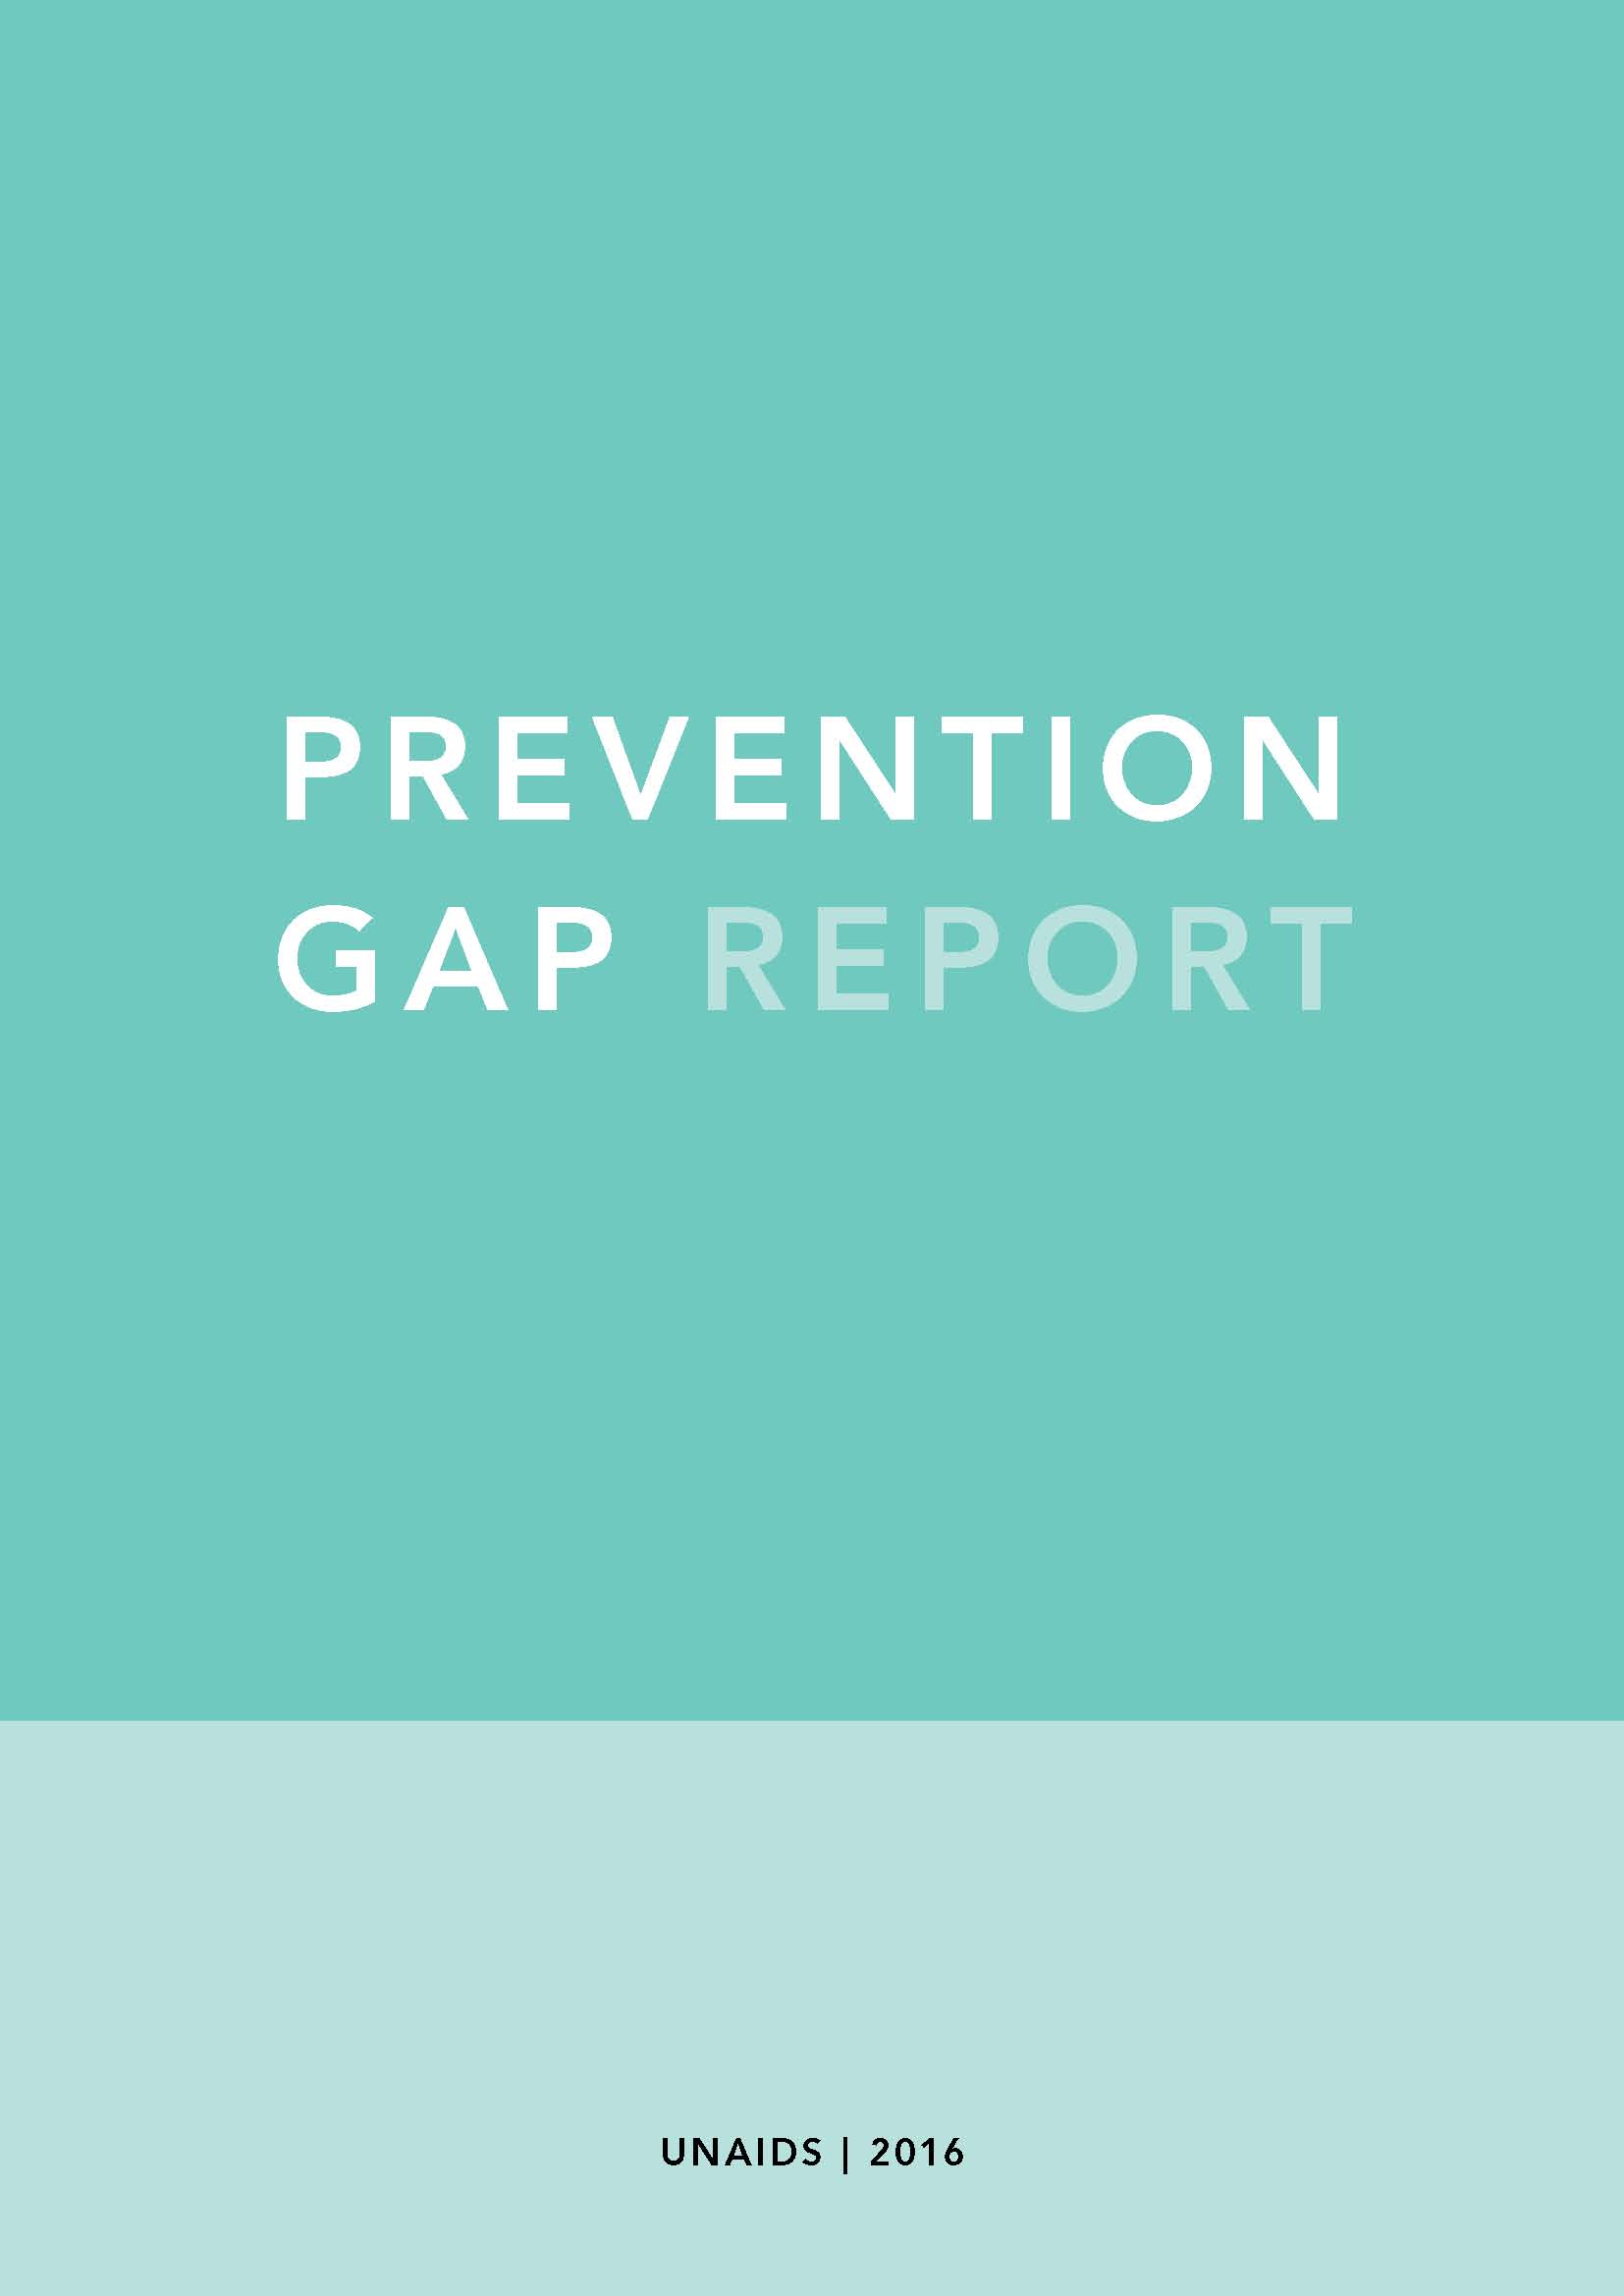 2016 prevention gap report: Summary